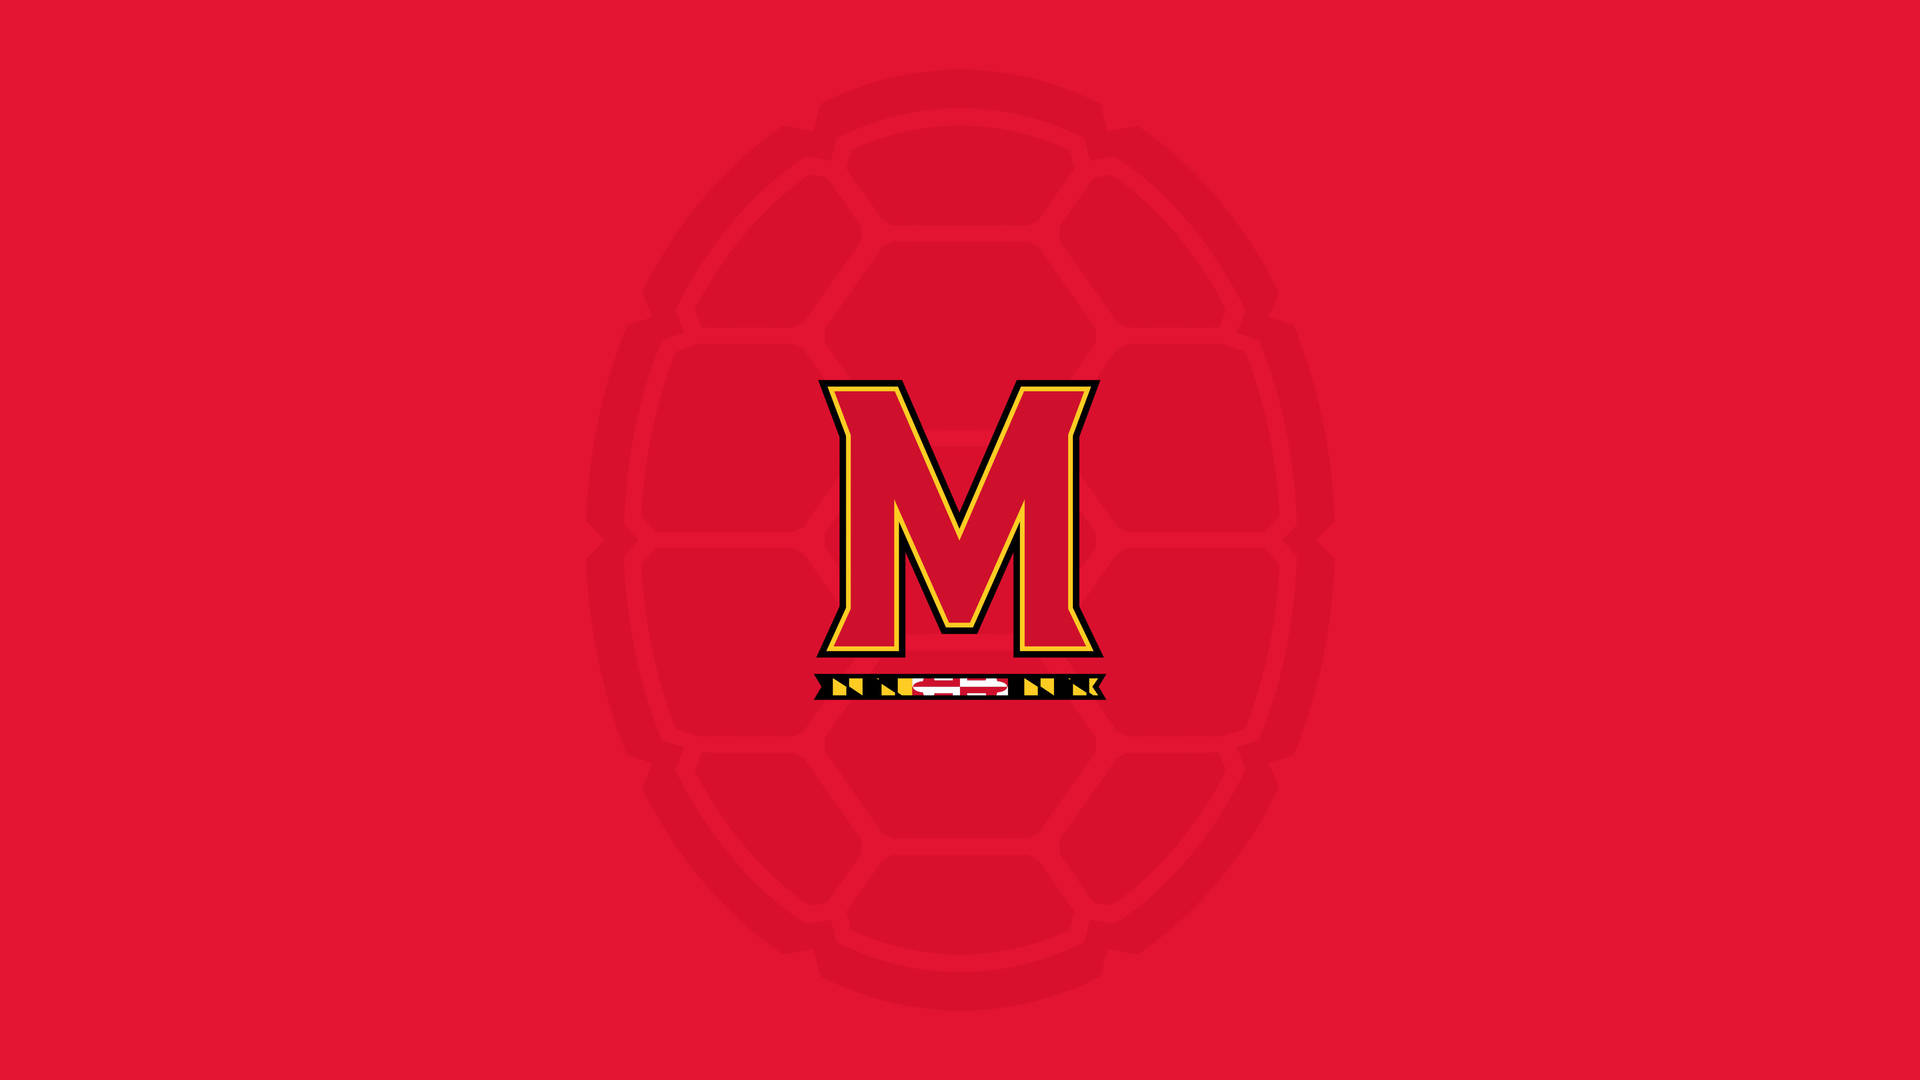 University Of Maryland Subtle Red Background Wallpaper